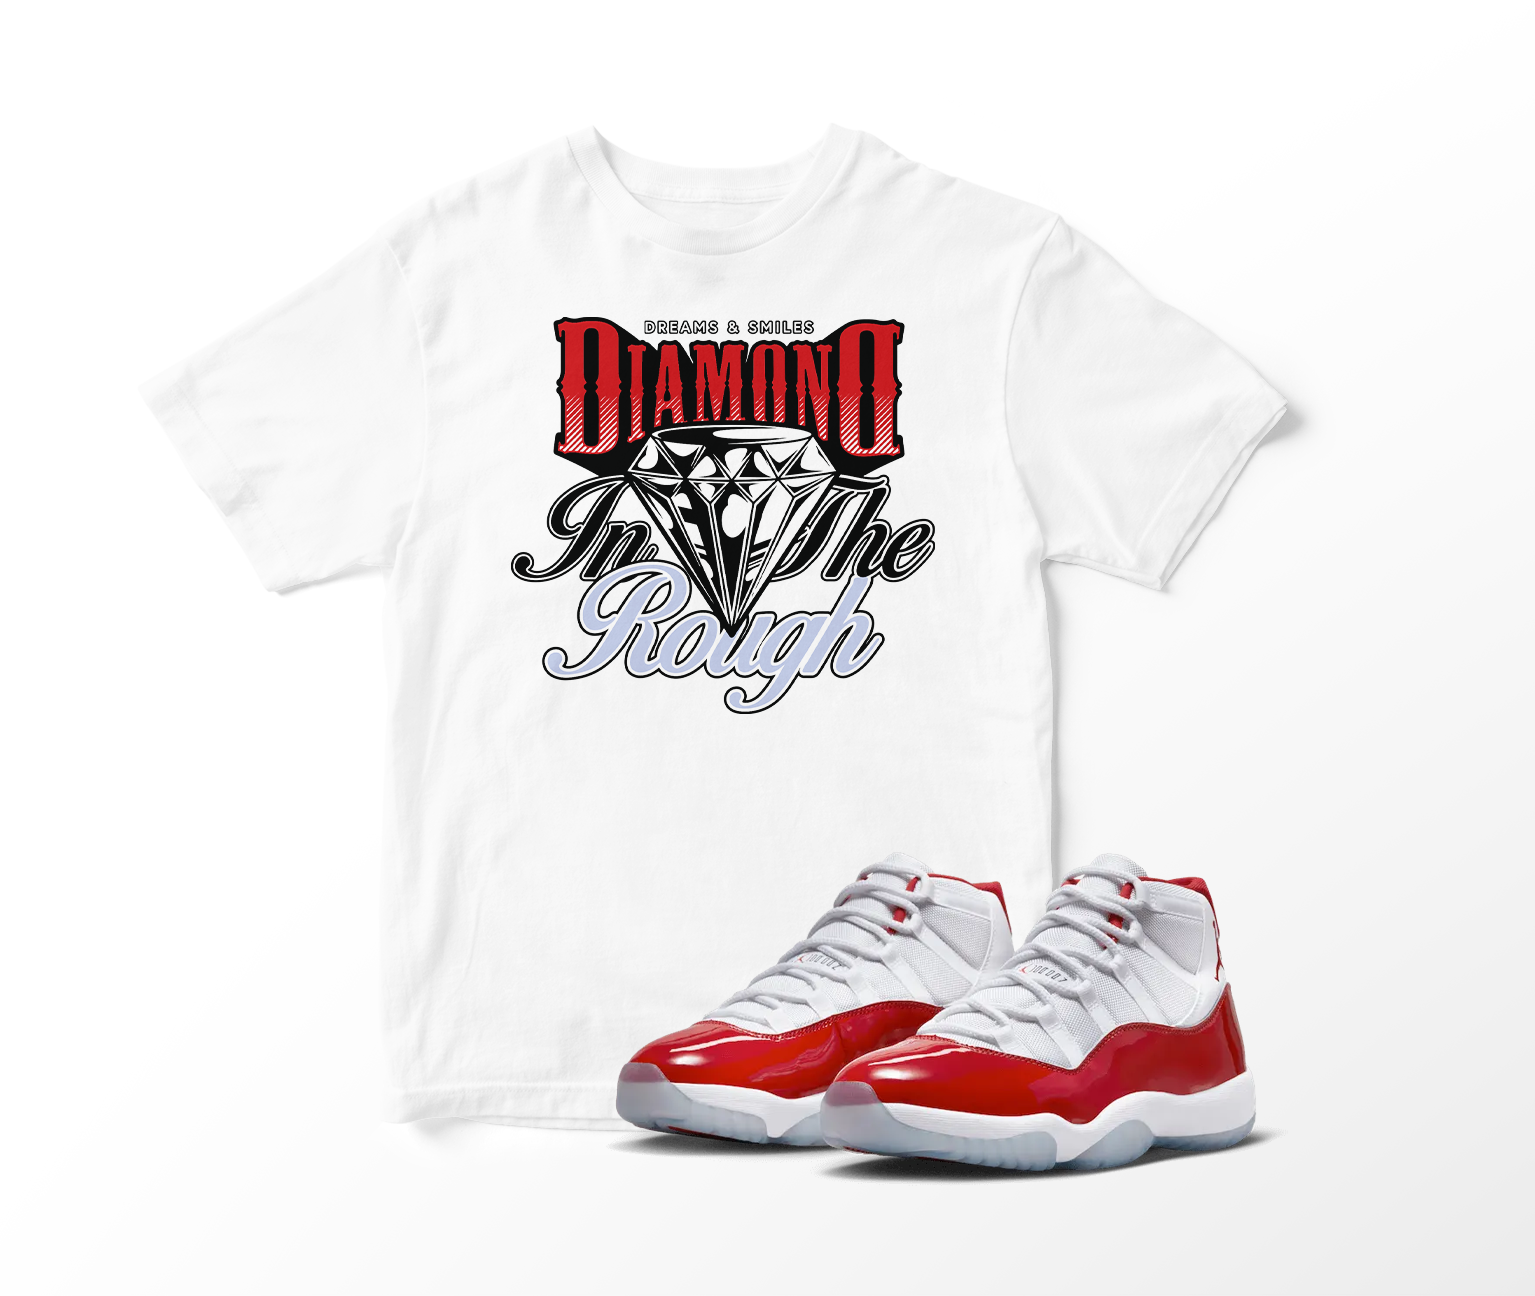 'Diamond In The Rough' Custom Graphic Short Sleeve T-Shirt To Match Air Jordan 11 Cherry Red